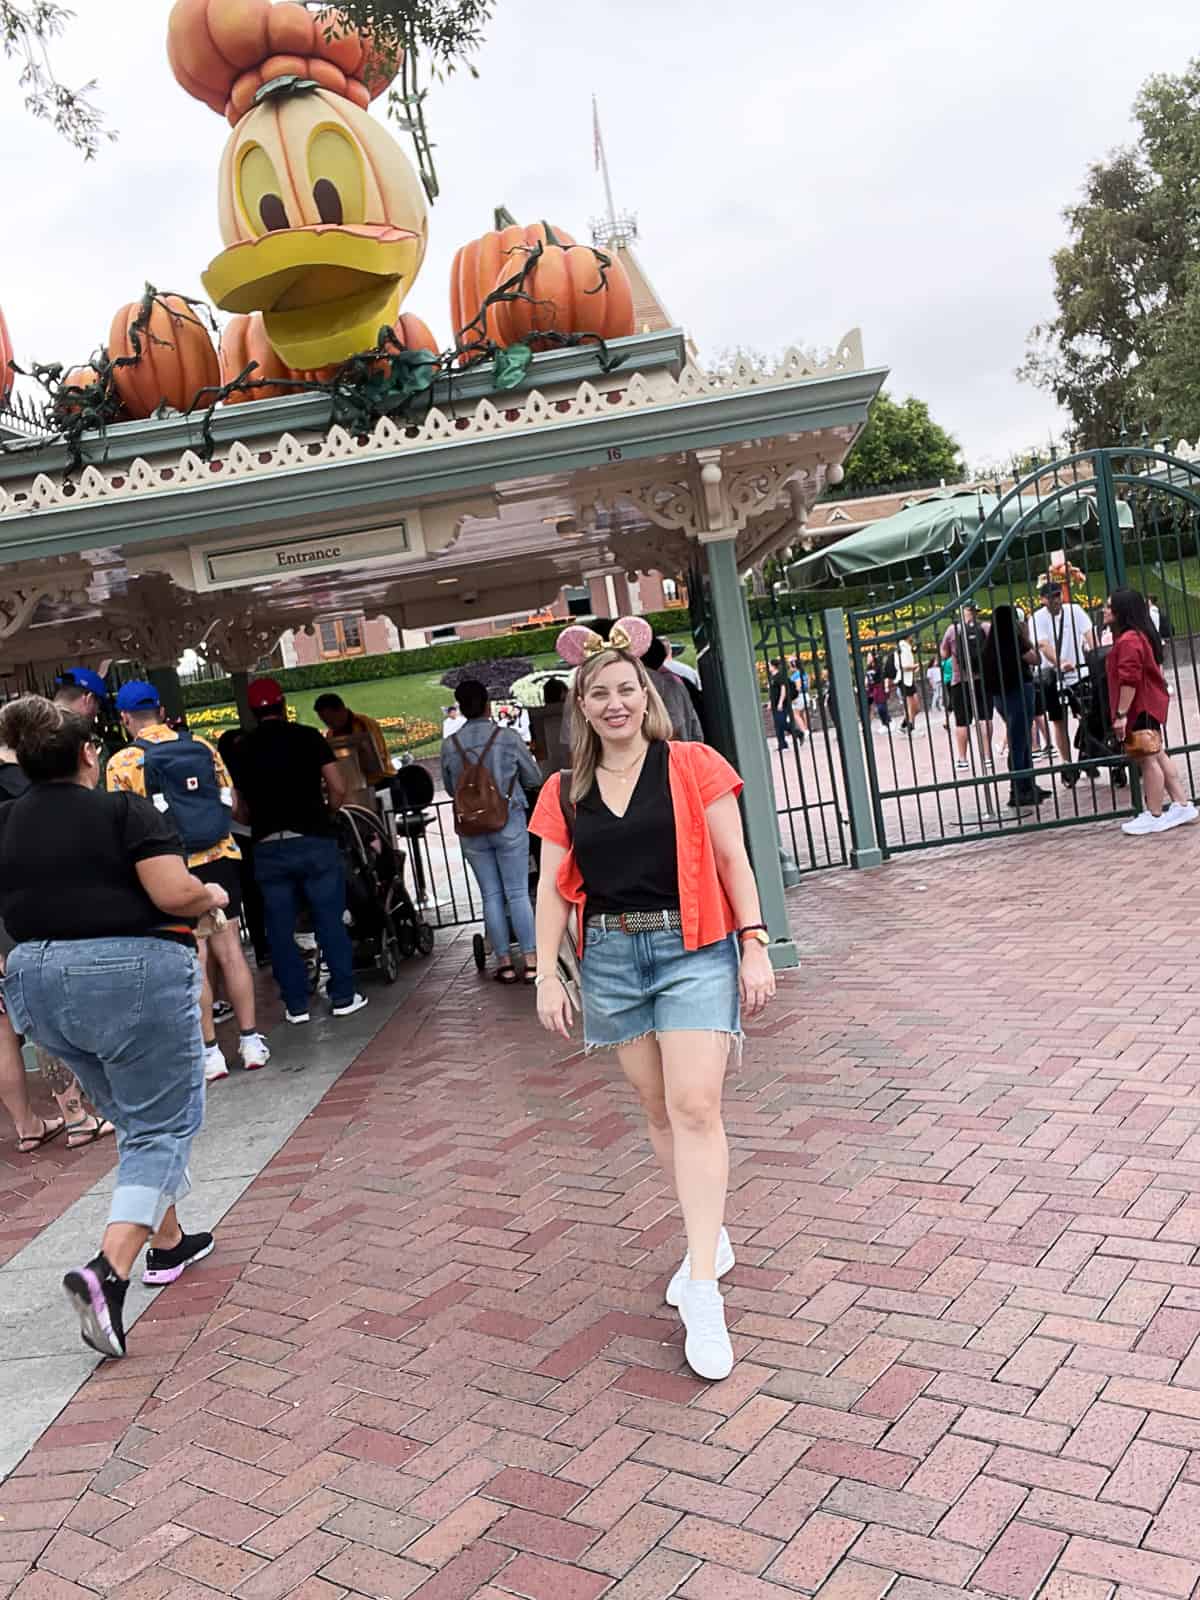 Jenna Passaro Disneyland blogger demonstrating Halloween outfits at Disneyland